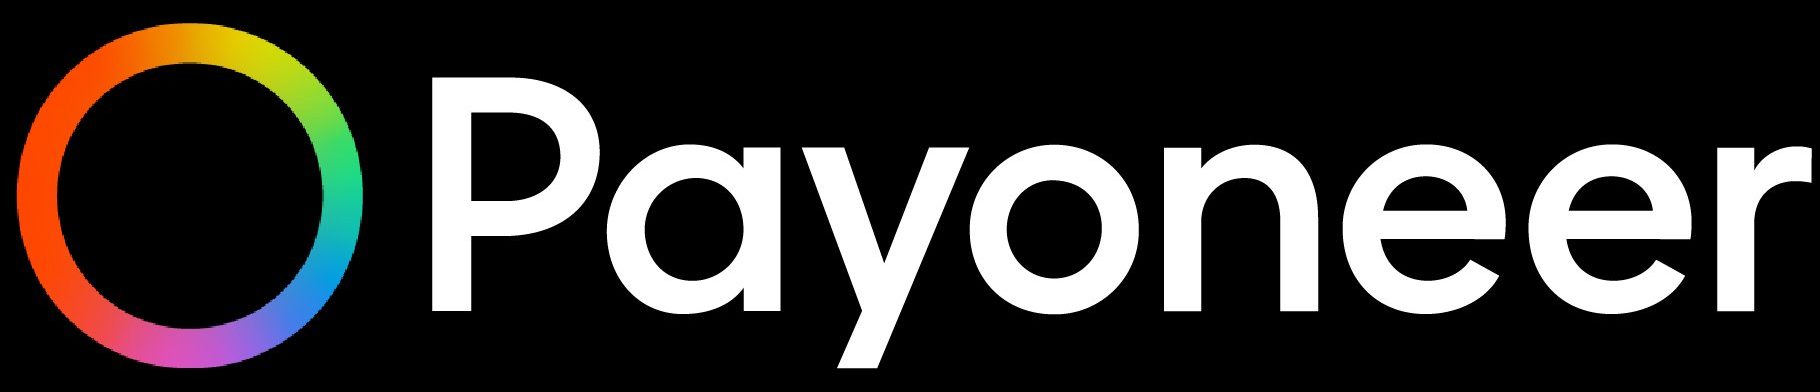 Payoneer-White-Logo-Vector-01